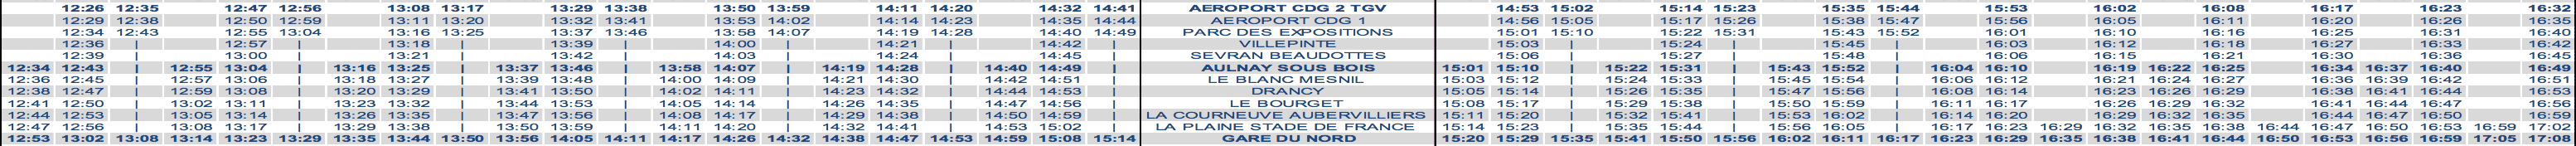 RER B Train Timetable CDG to Paris Afternoon Weekday Strike 2020